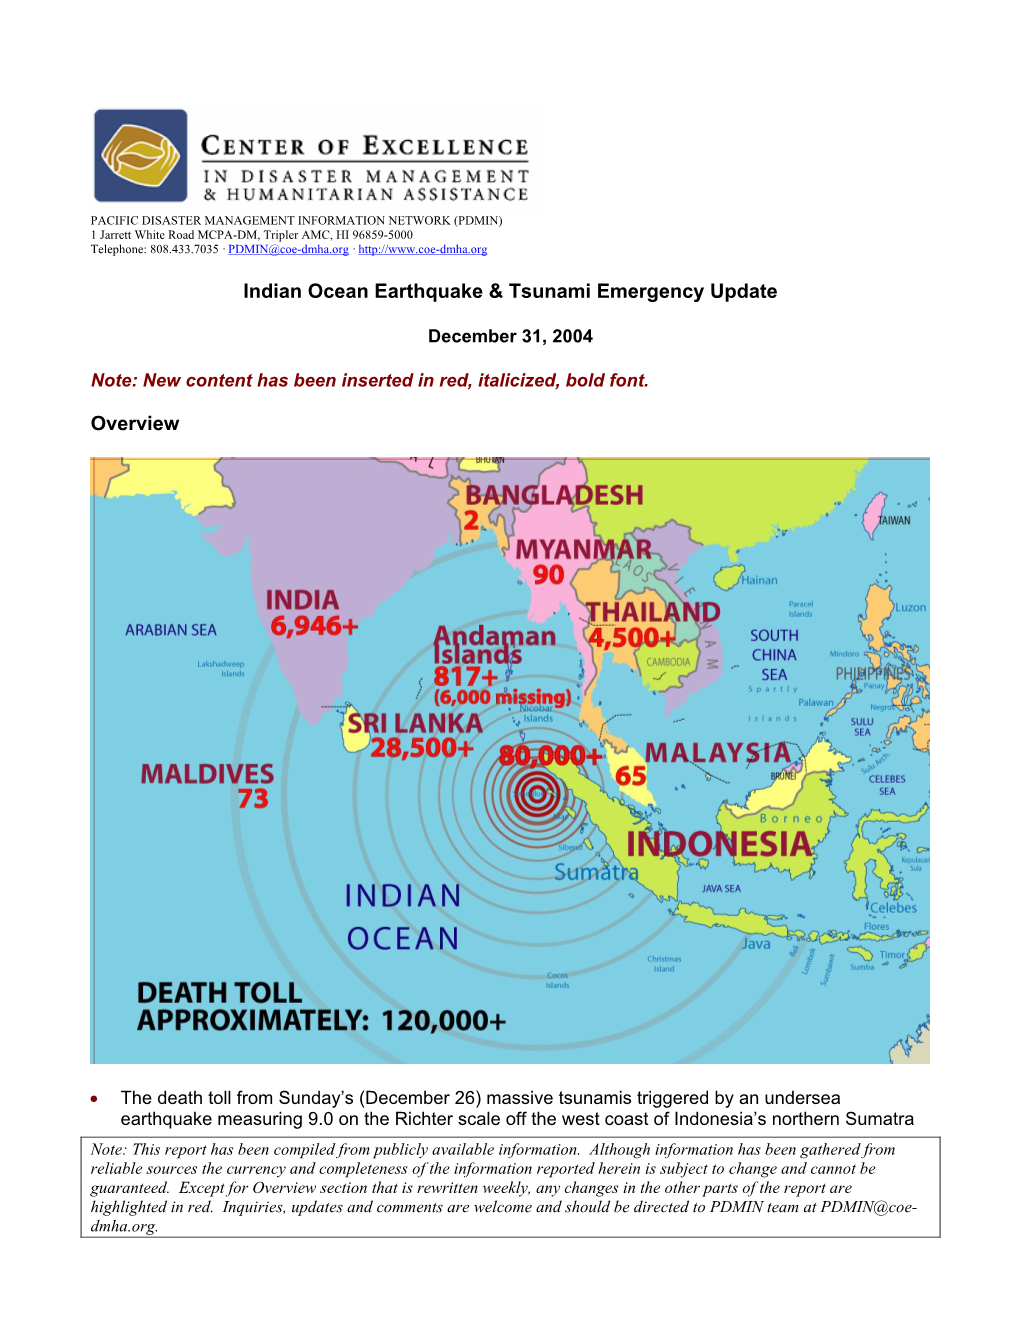 Indian Ocean Earthquake & Tsunami Emergency Update Overview